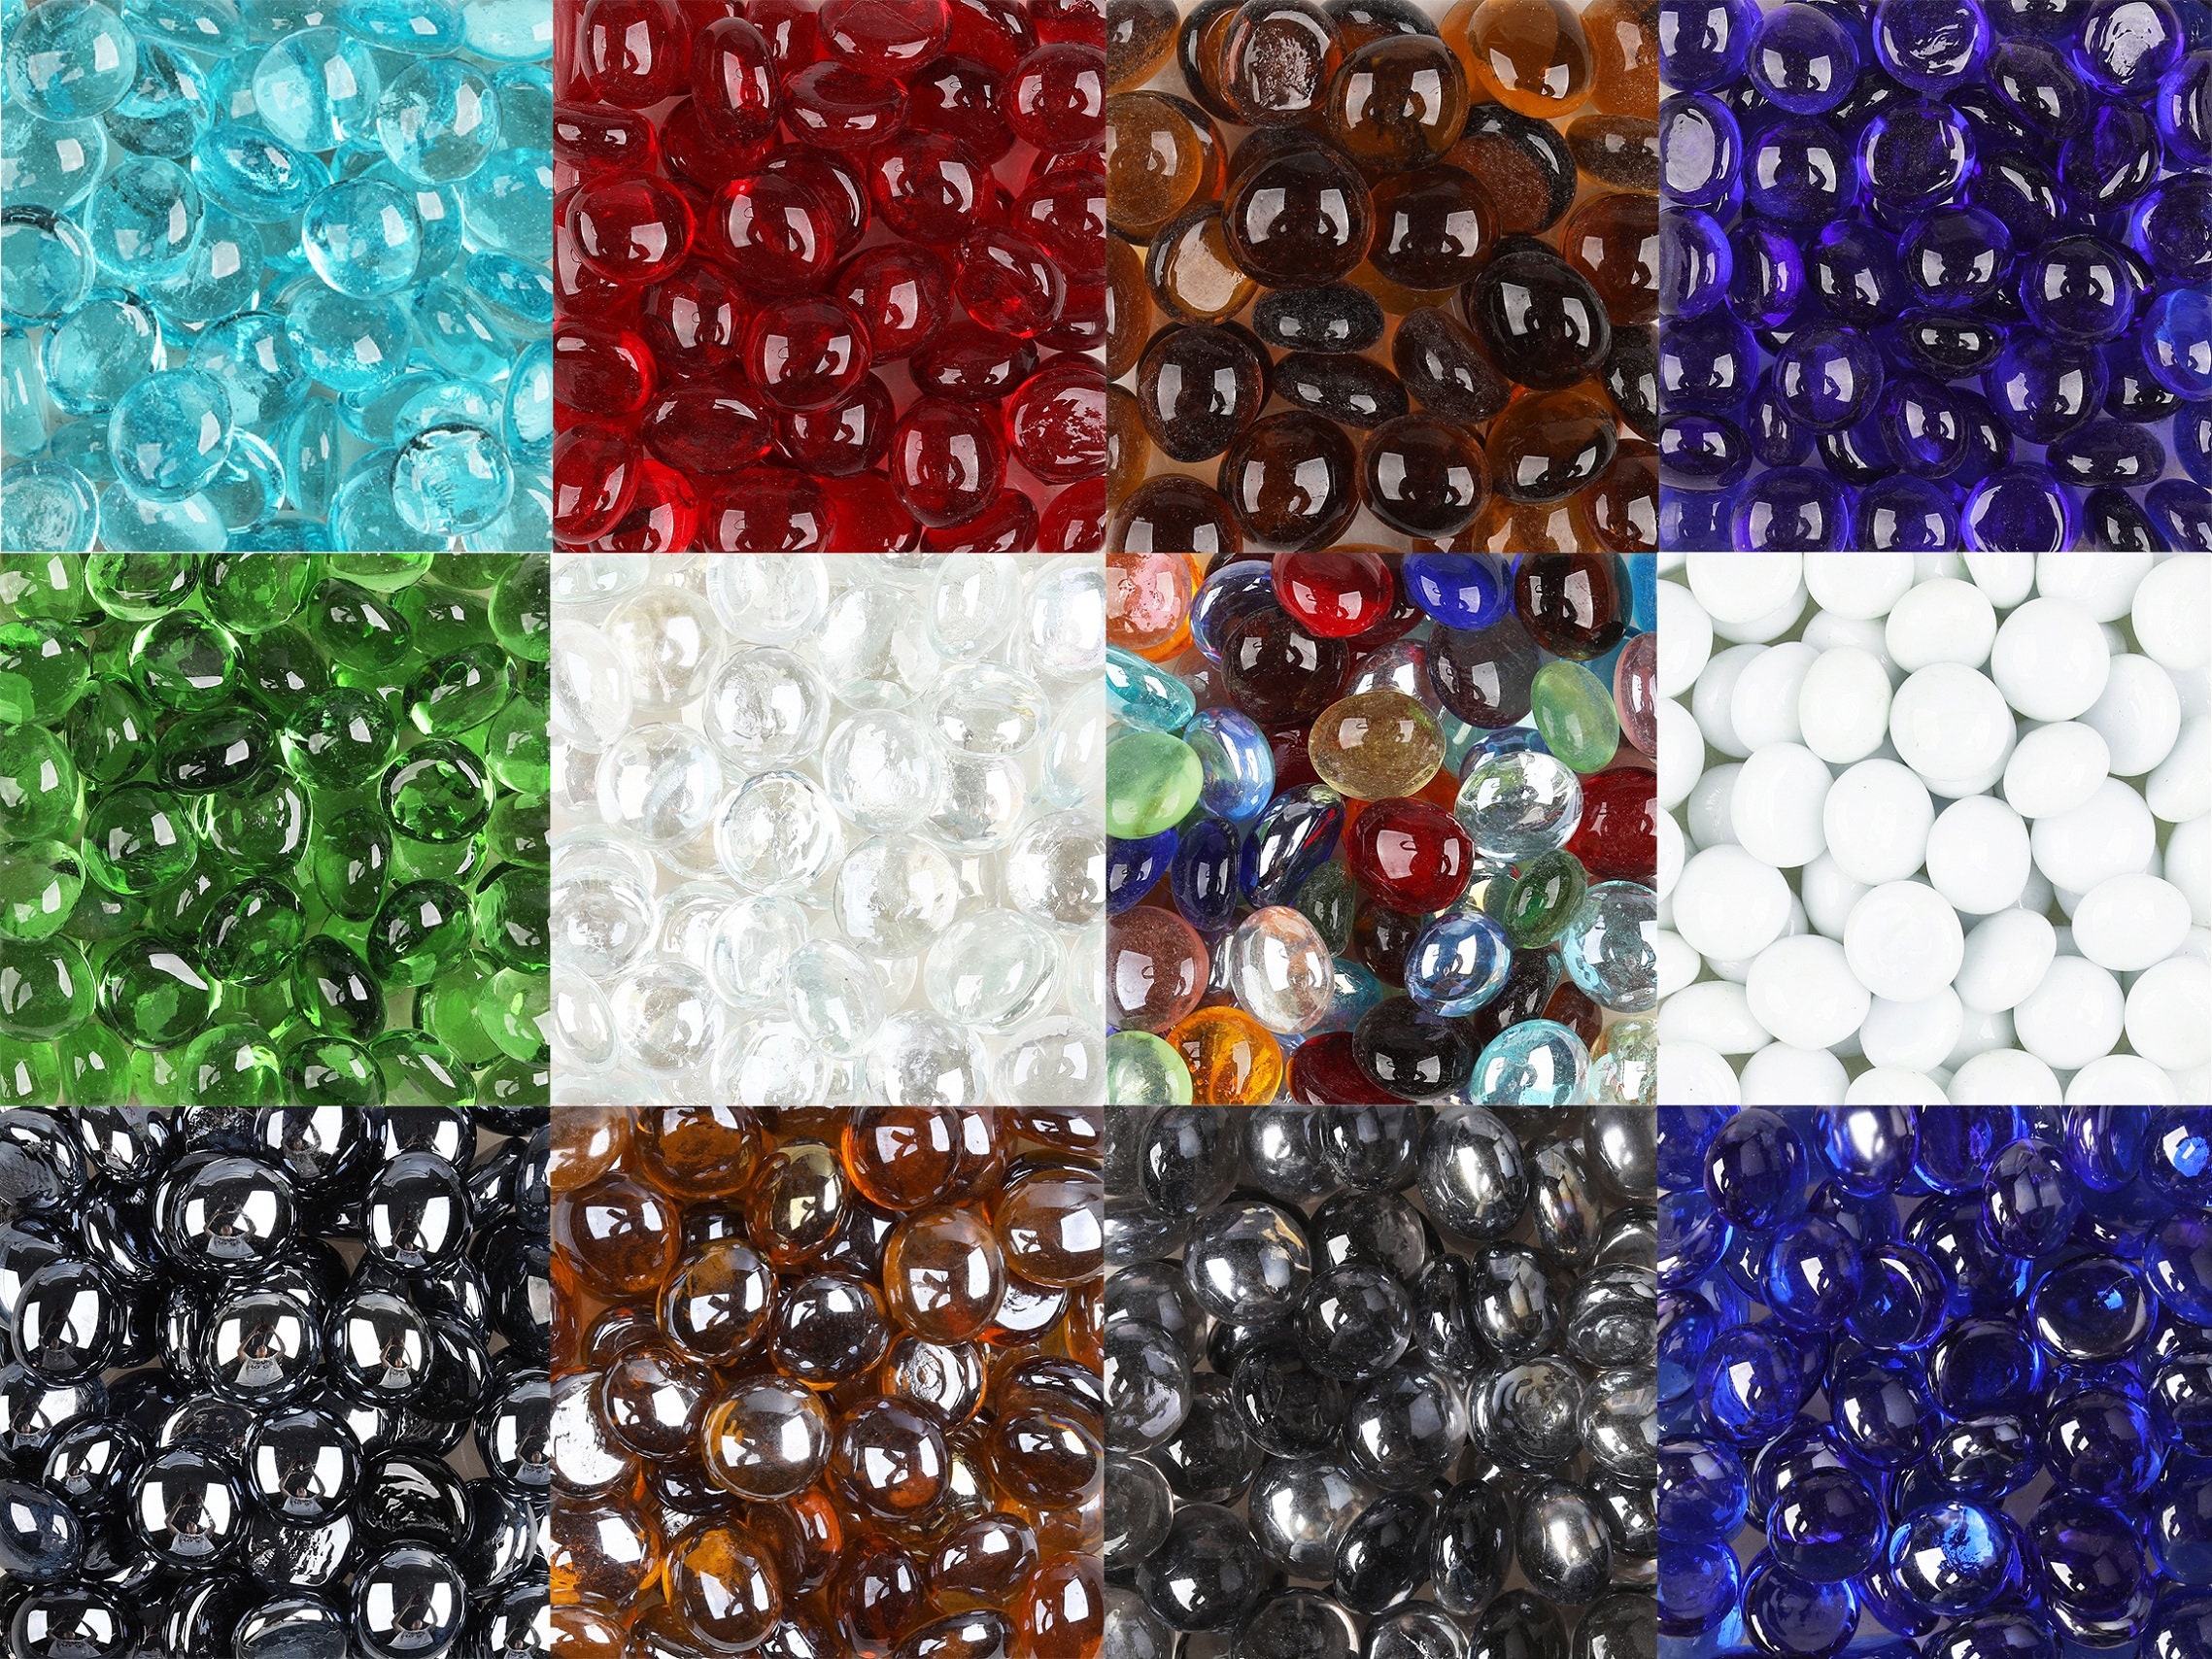 100 Mixed Colors Glass Gems Stones, Mosaic Pebbles, Centerpiece Flat Marbles,  Vase Fillers, Cabochons 